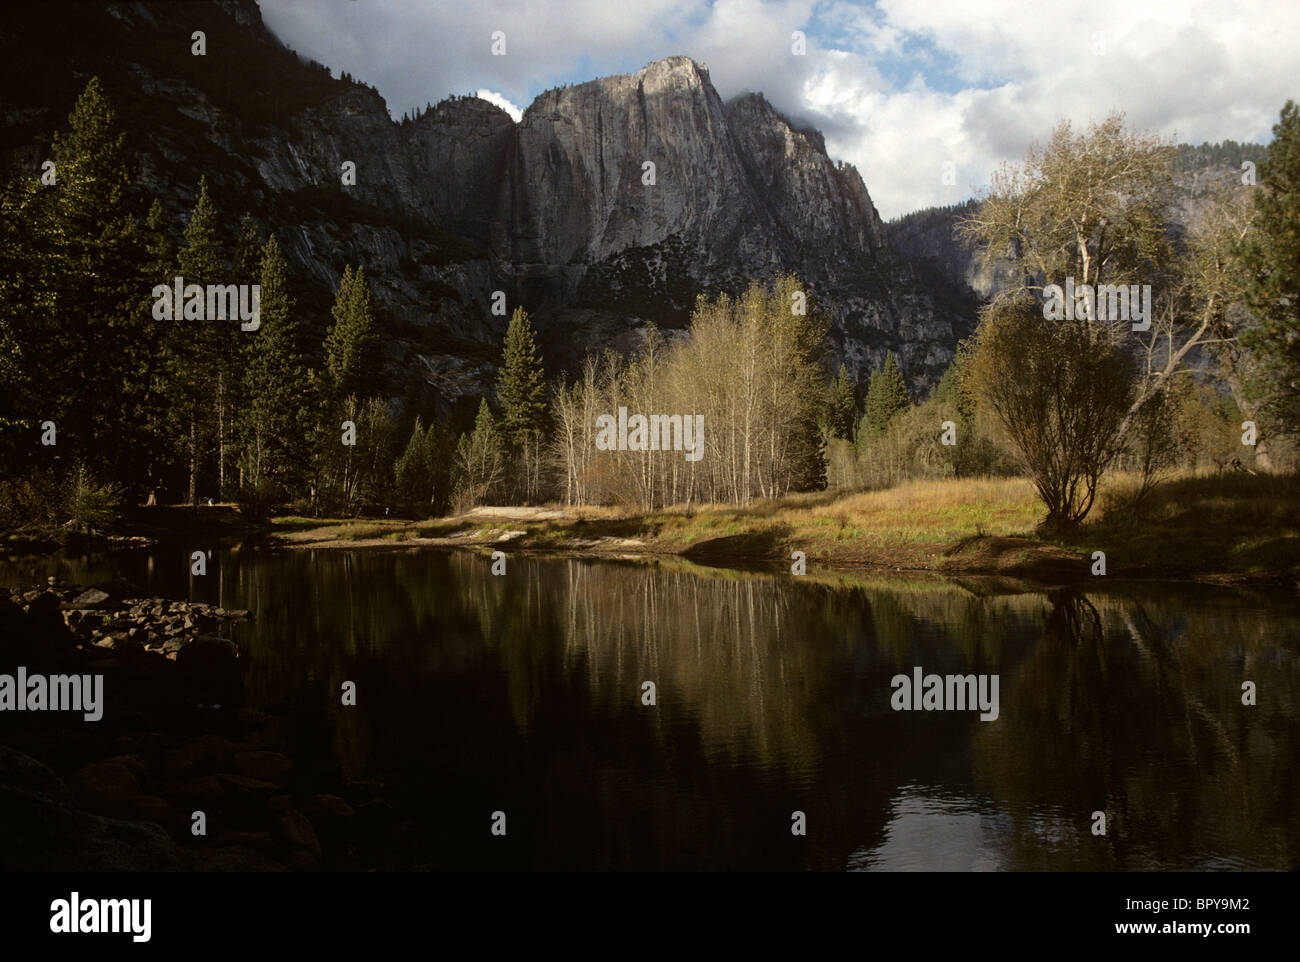 A wide landscape scene of Yosemite Valley in Yosemite National Park, California. Stock Photo